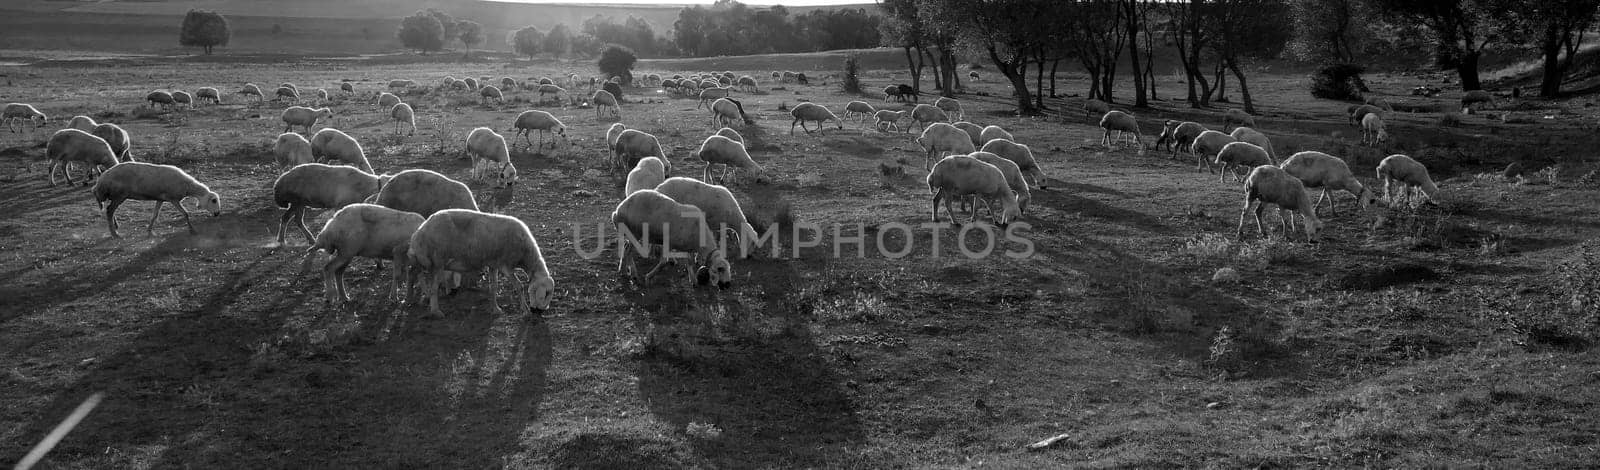 flock of sheep grazing in the field, sheep and lambs grazing in the open field, flock of sheep, by nhatipoglu